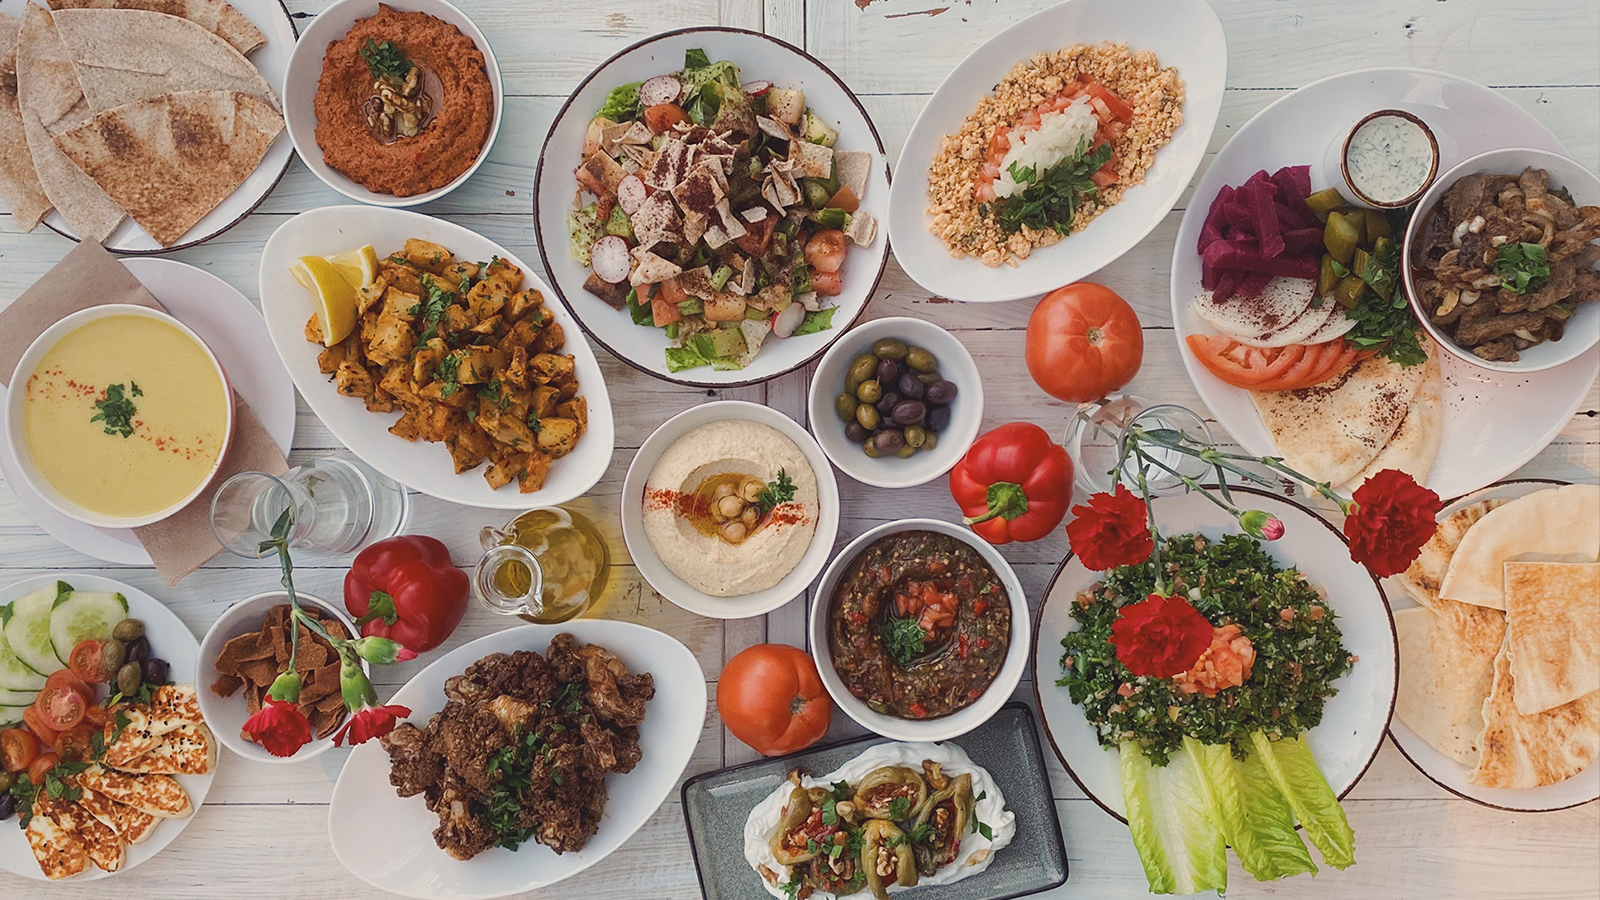 Mazahr Lebanese Kitchen - Vancouver